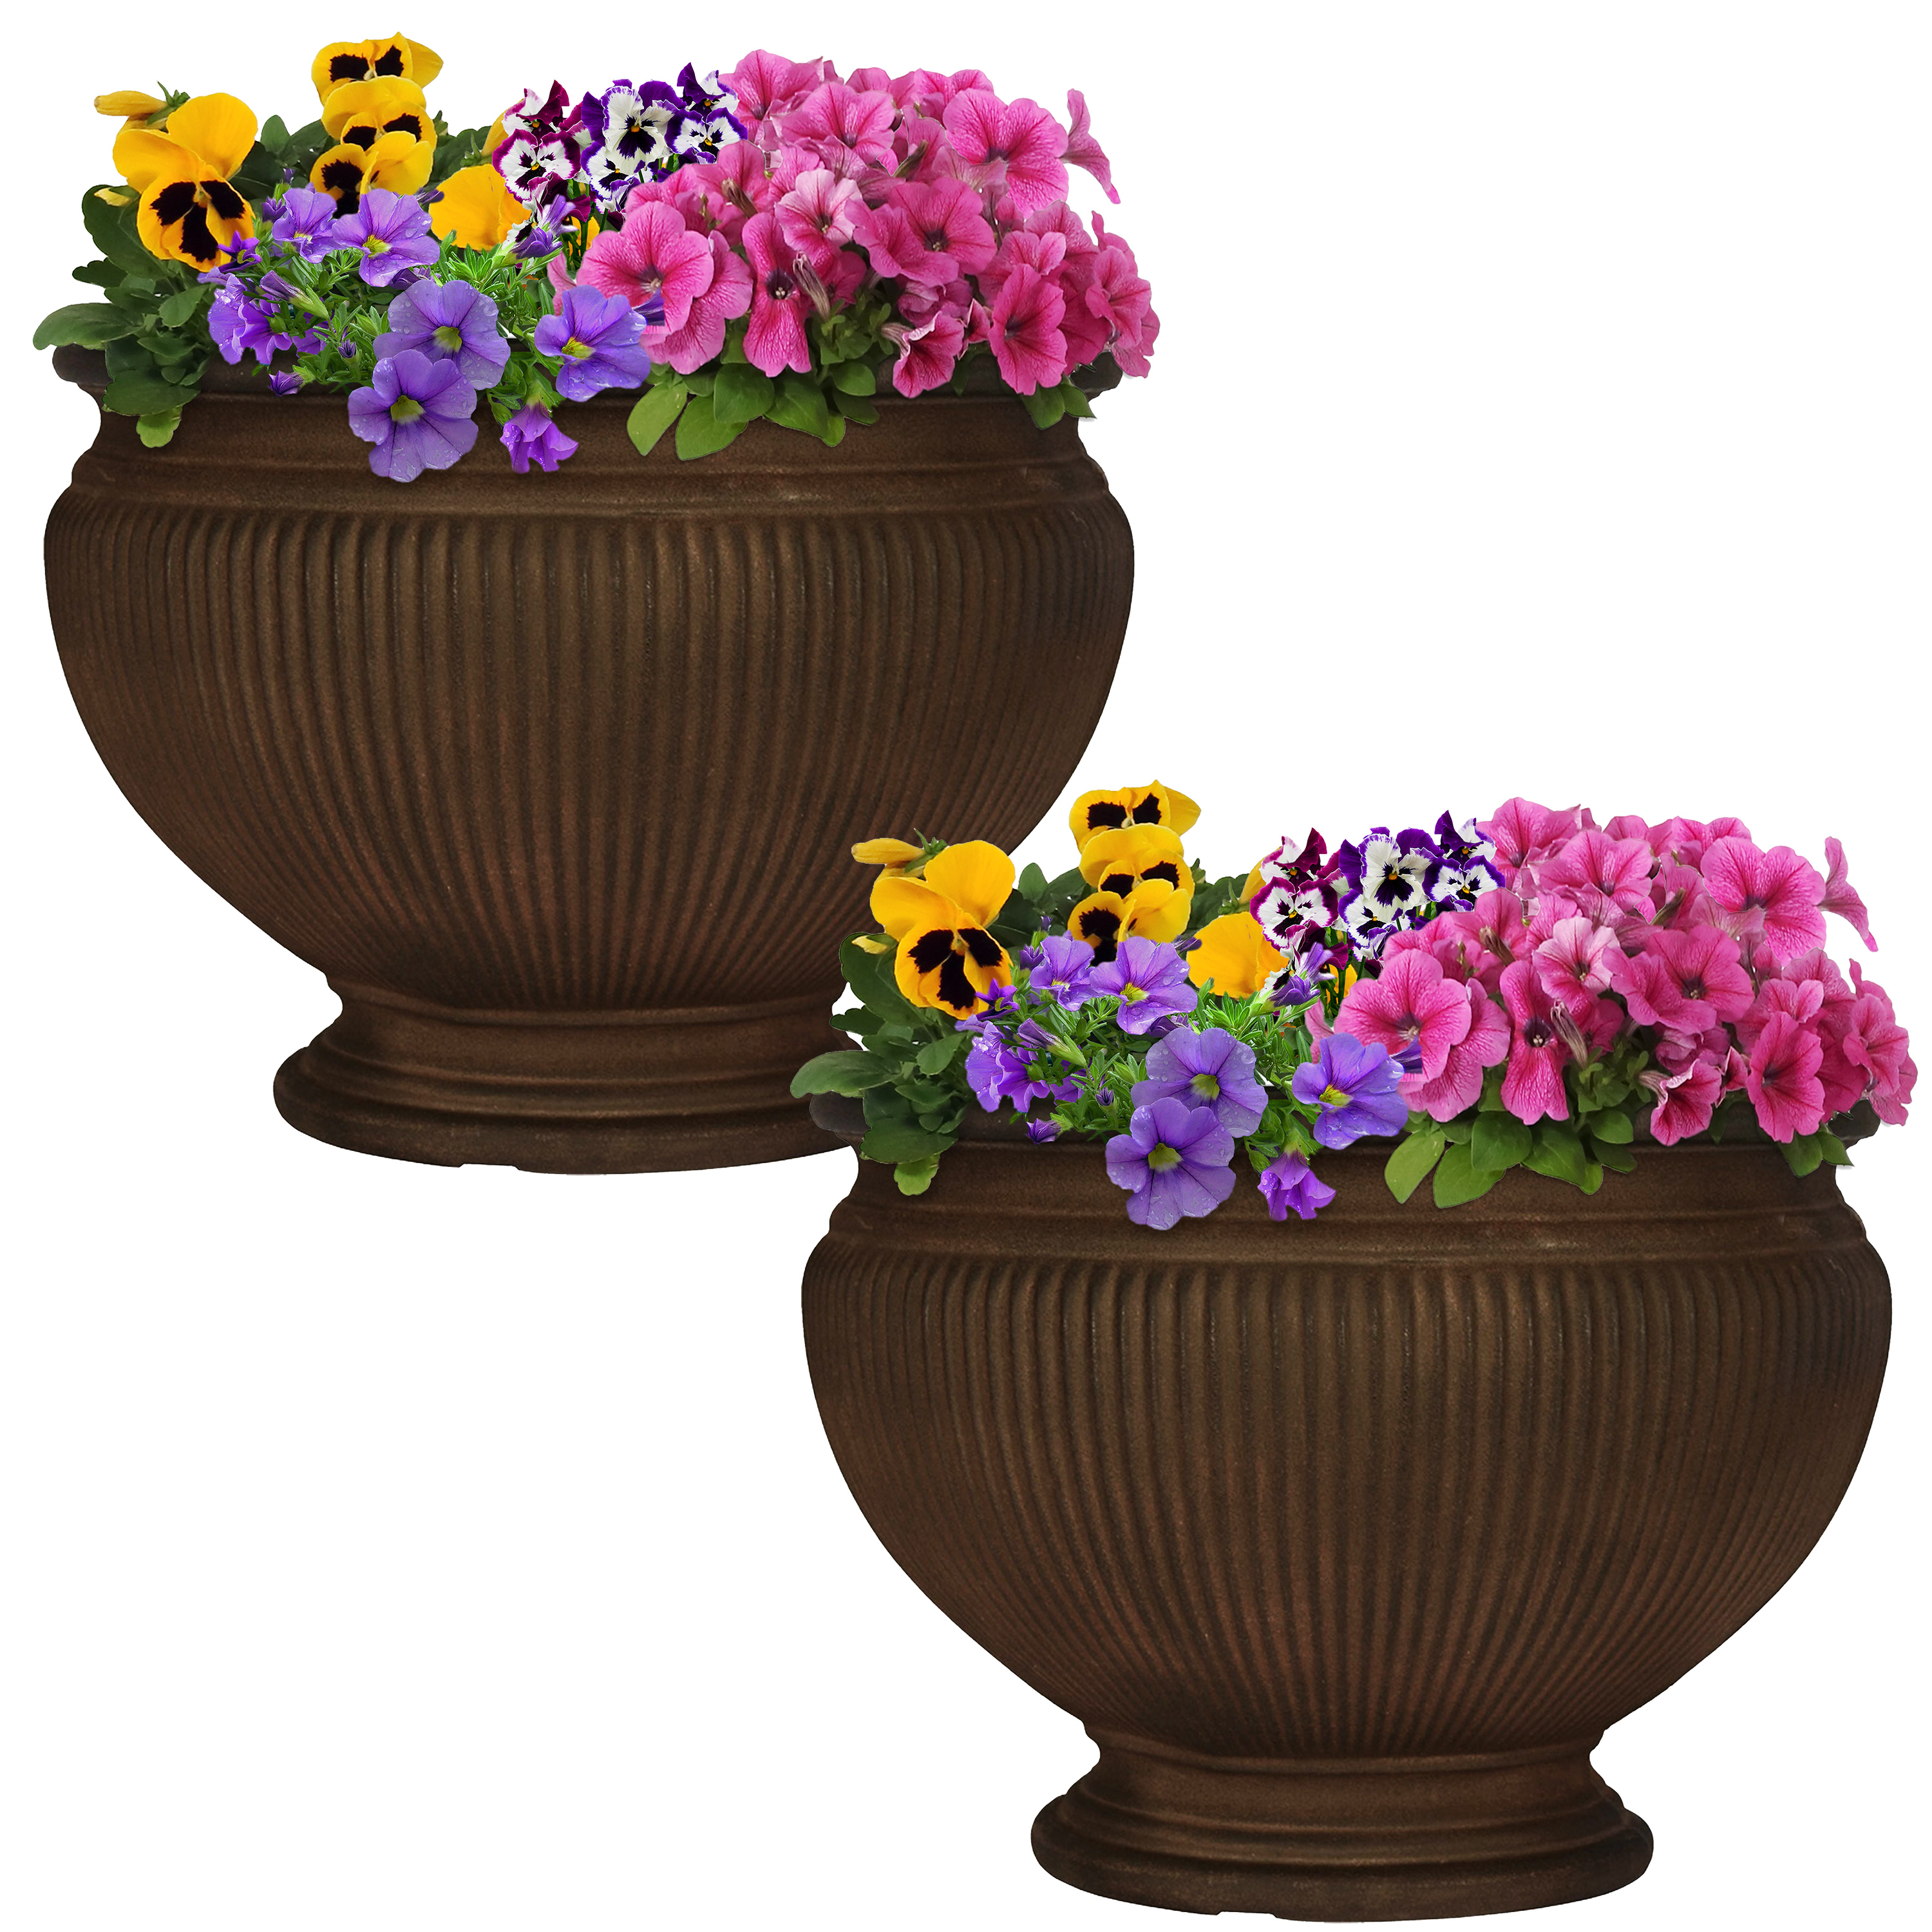 Sunnydaze Elizabeth Outdoor Flower Pot Planter - Rust Finish - 16-Inch - 2-Pack